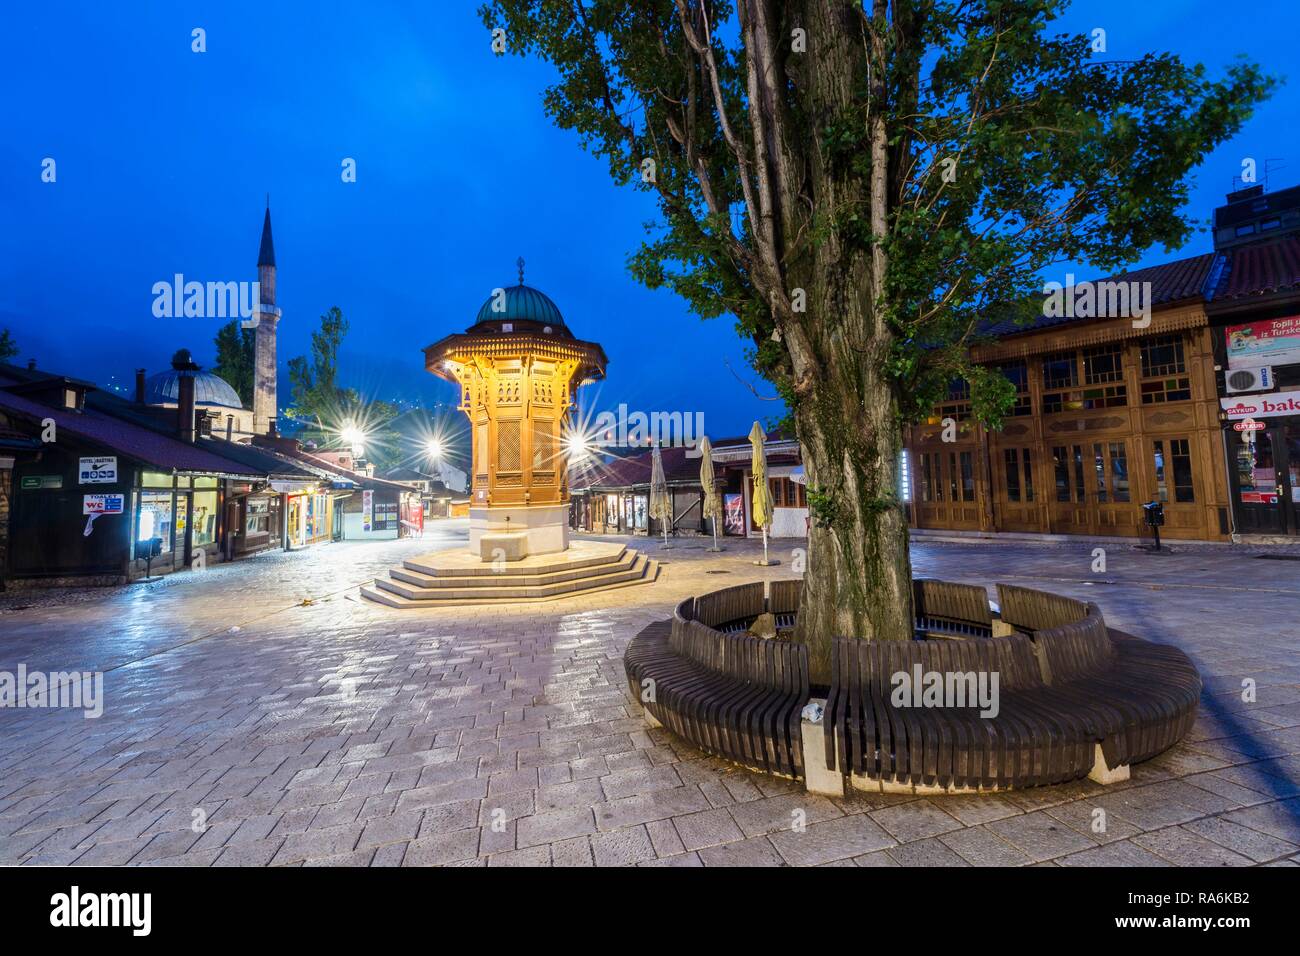 Sebilj illuminato stile ottomano fontana di legno di sunrise, Bascarsija vecchio bazar, Sarajevo, Bosnia ed Erzegovina Foto Stock